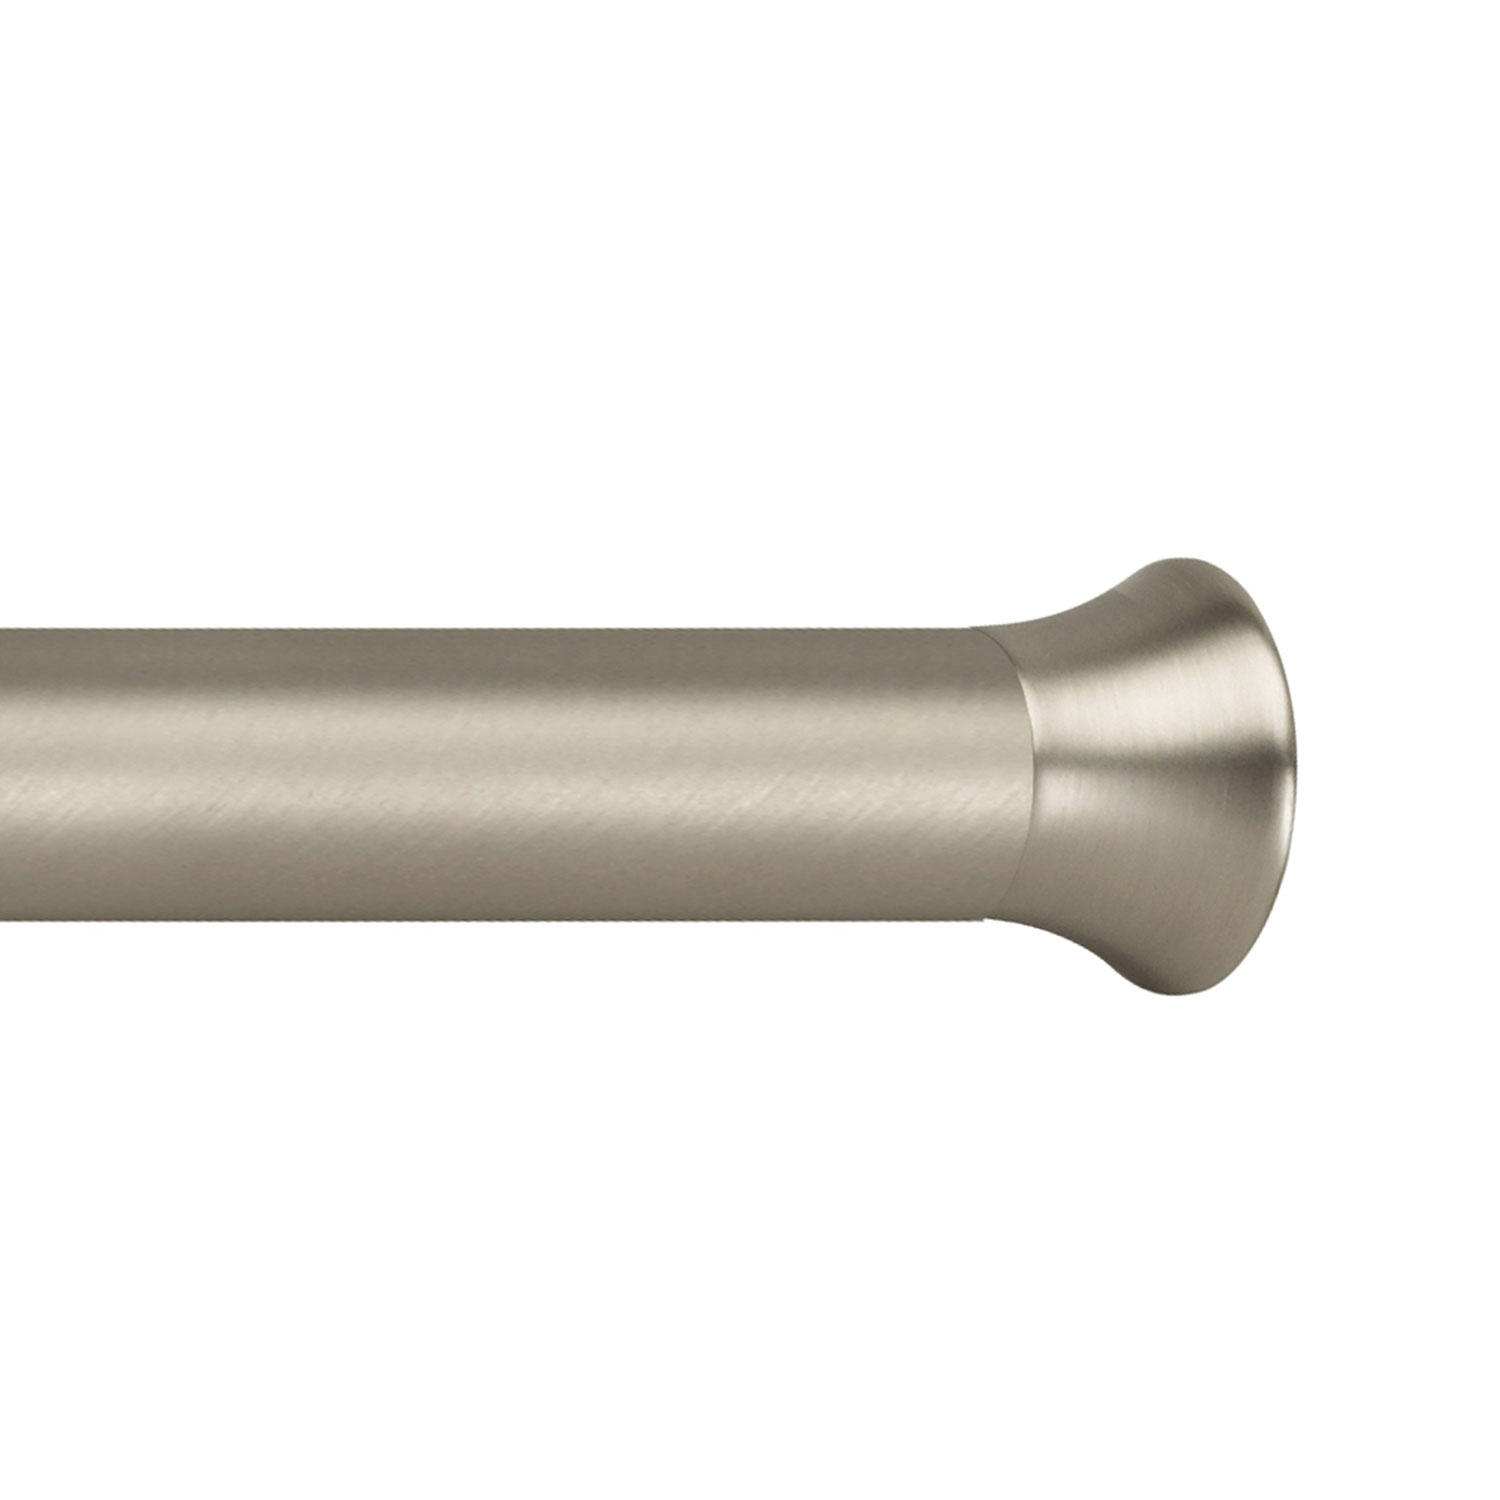 Deco Tension Rod 7/8" diameter, 36-54" length in nickel finish from Umbra